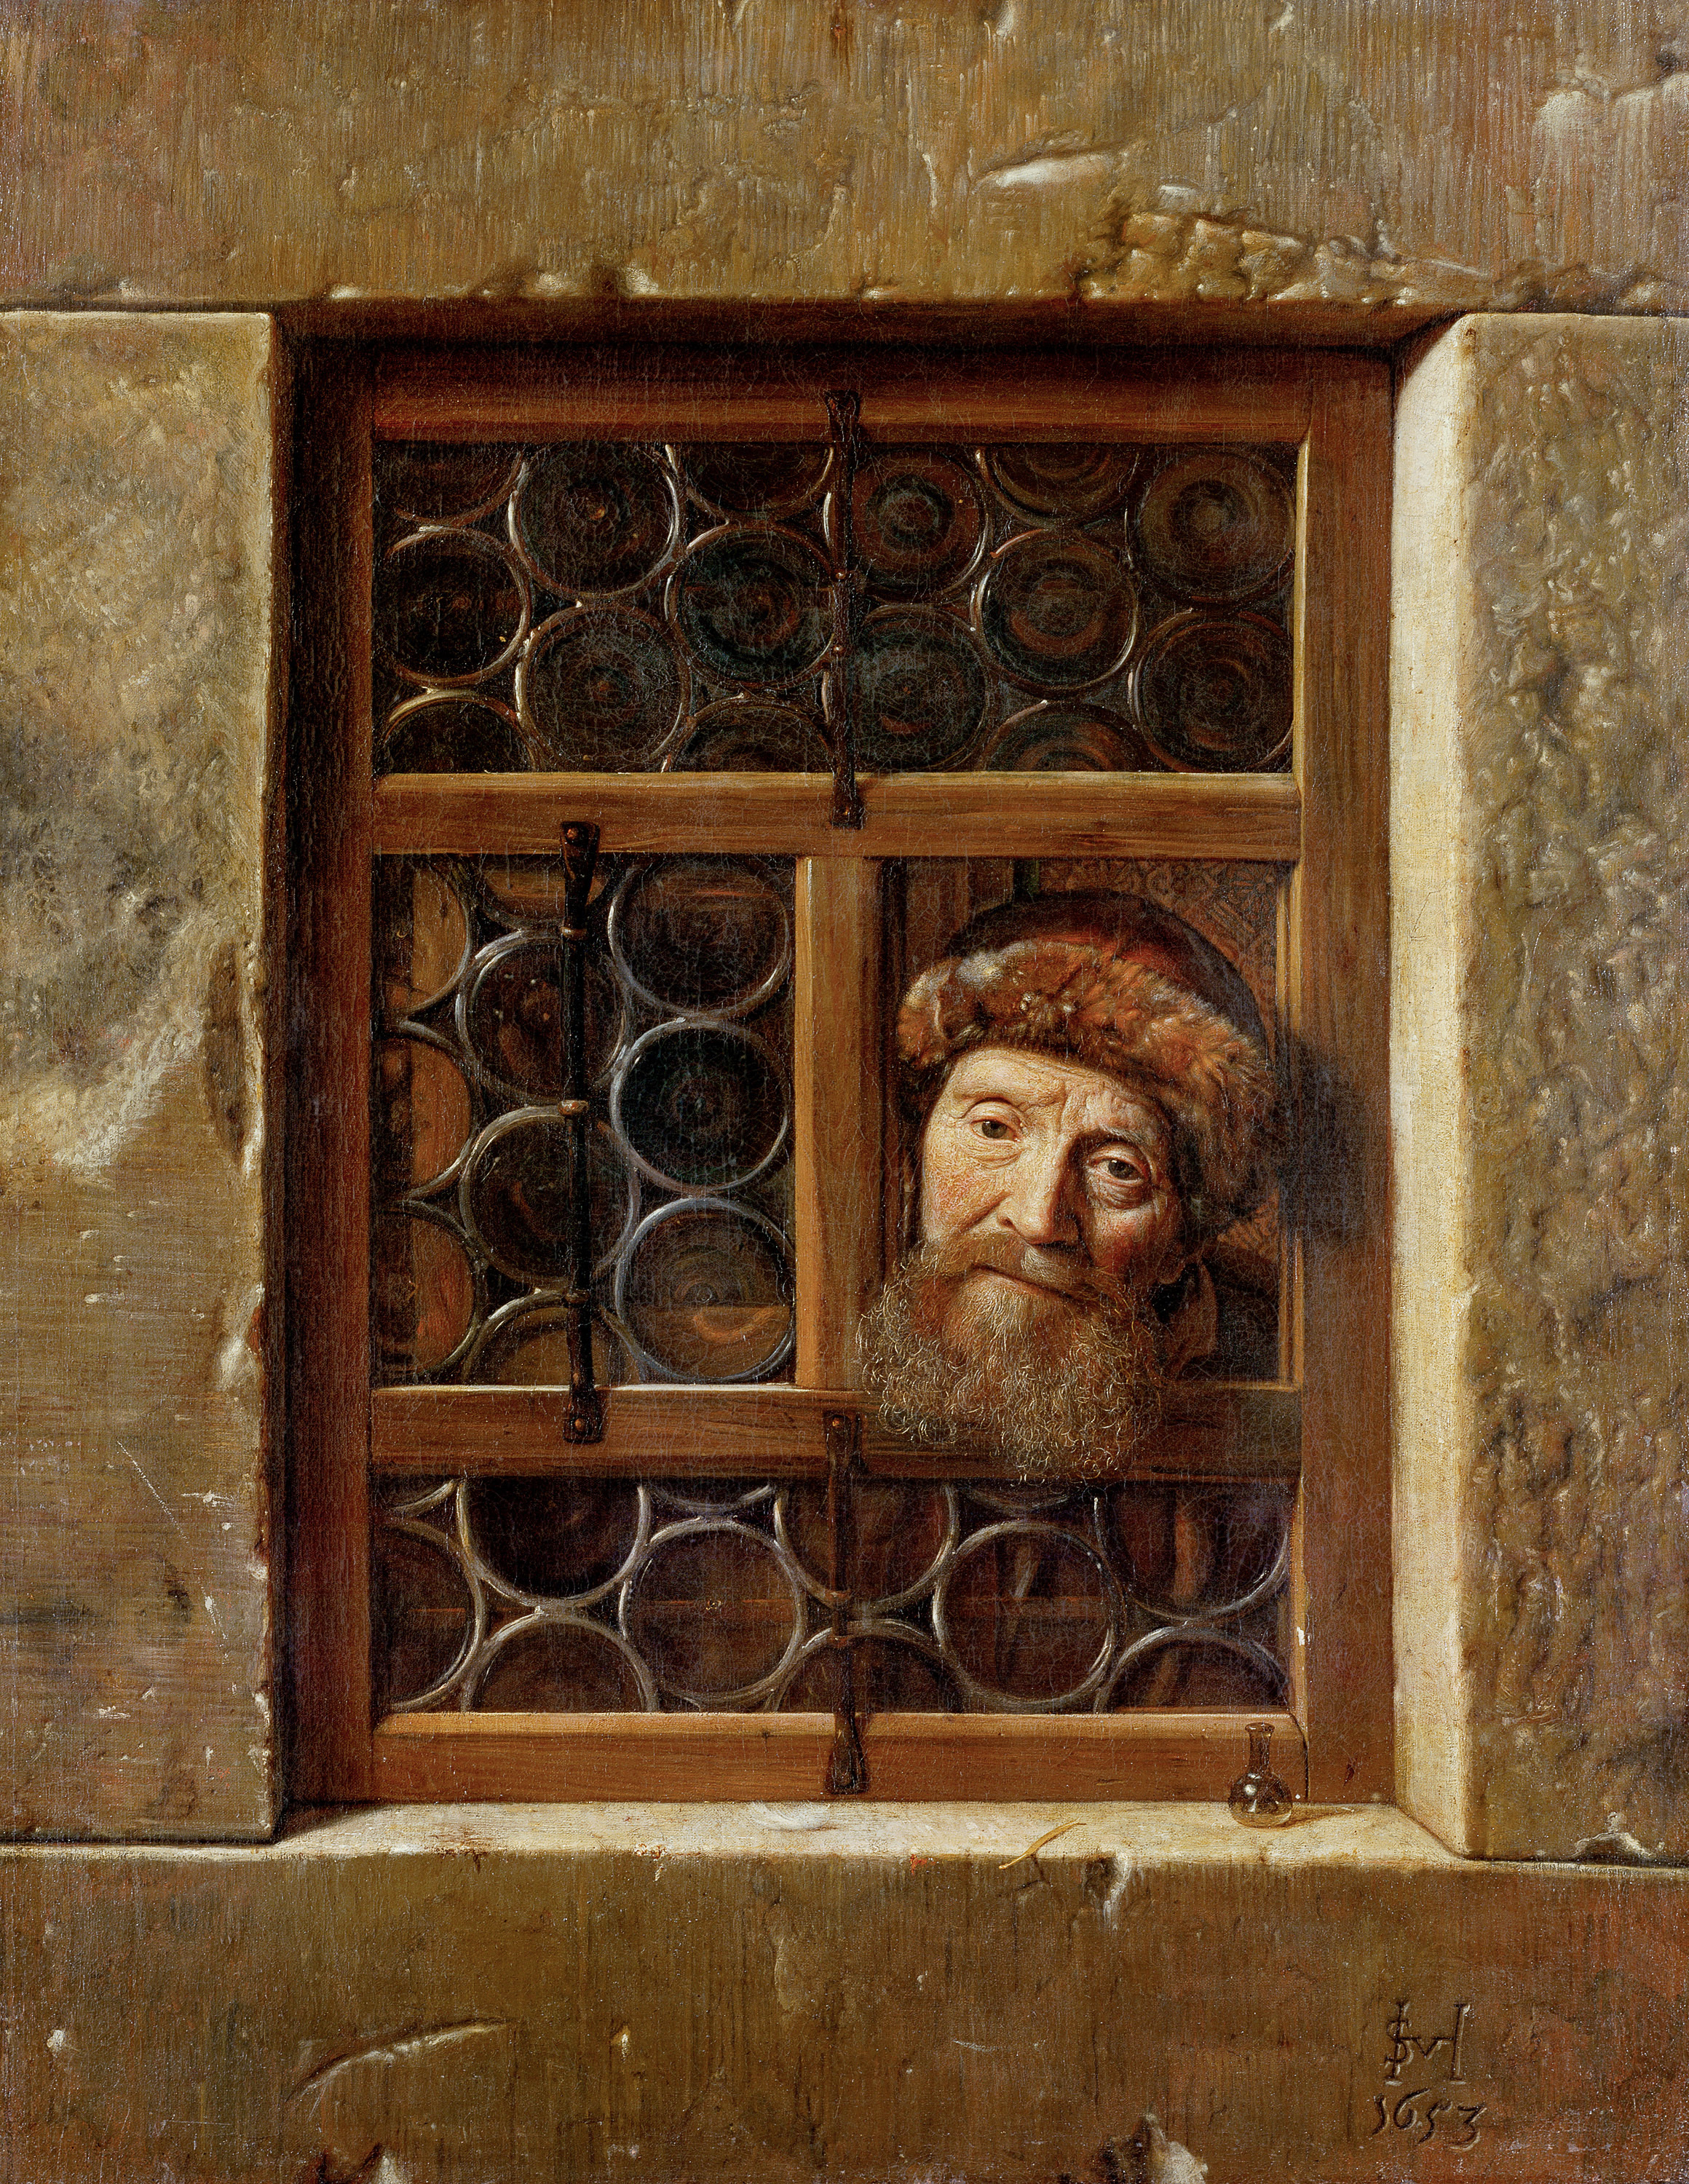 窗邊老者 by Samuel van Hoogstraten - 1653年 - 111 × 86.5 cm 